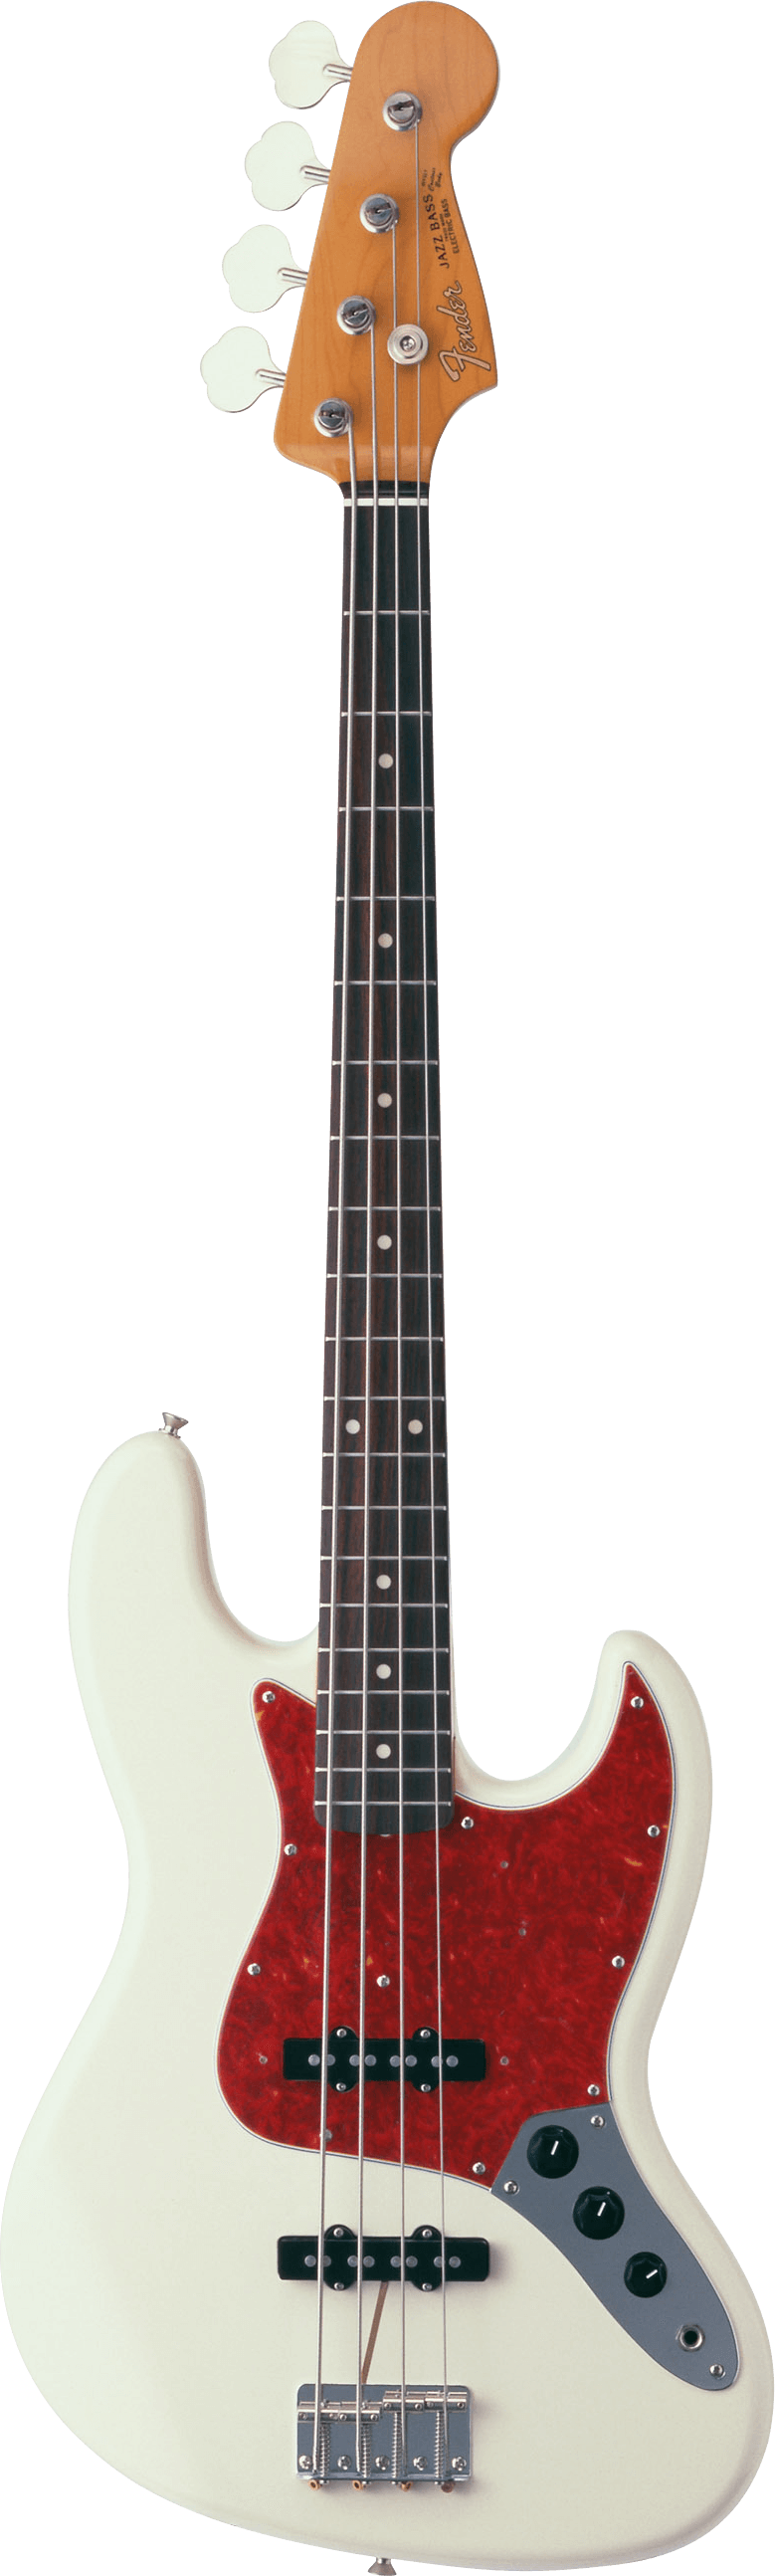 Bass Fender Jazz Precision Standard Guitar Electric Clipart